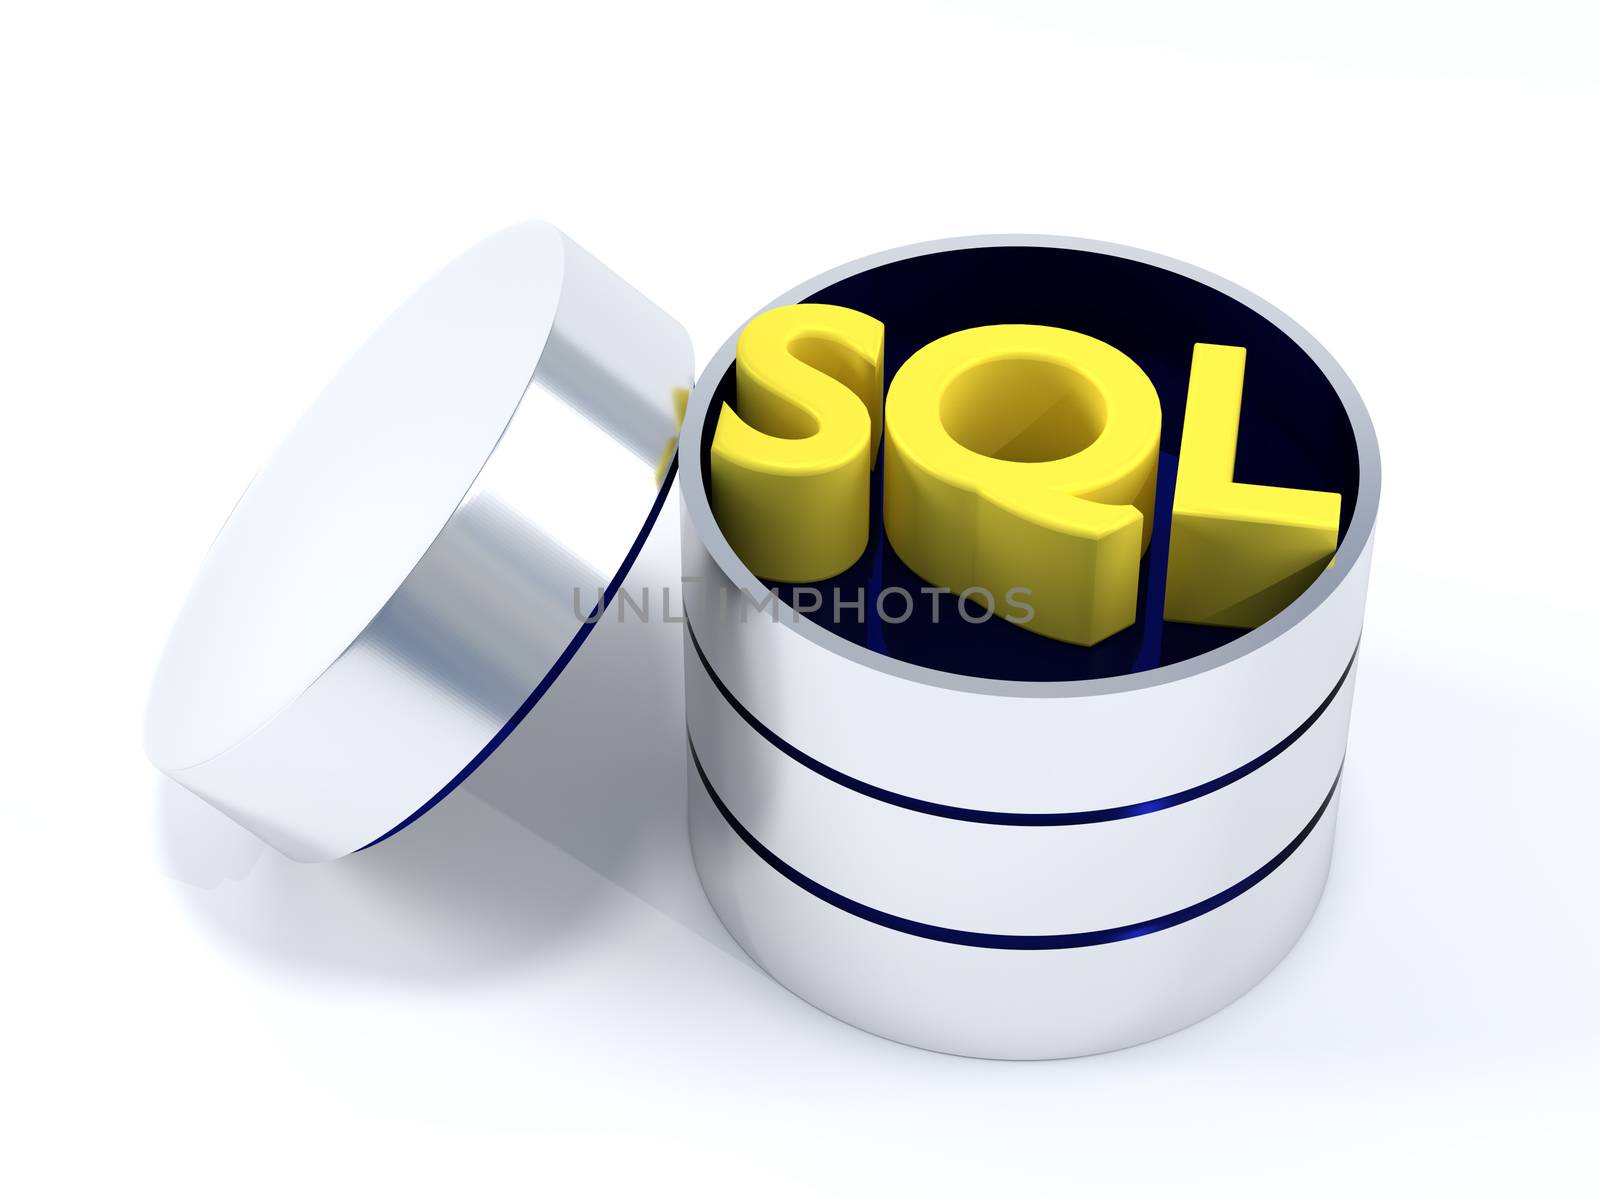 SQL Database by tonsnoei